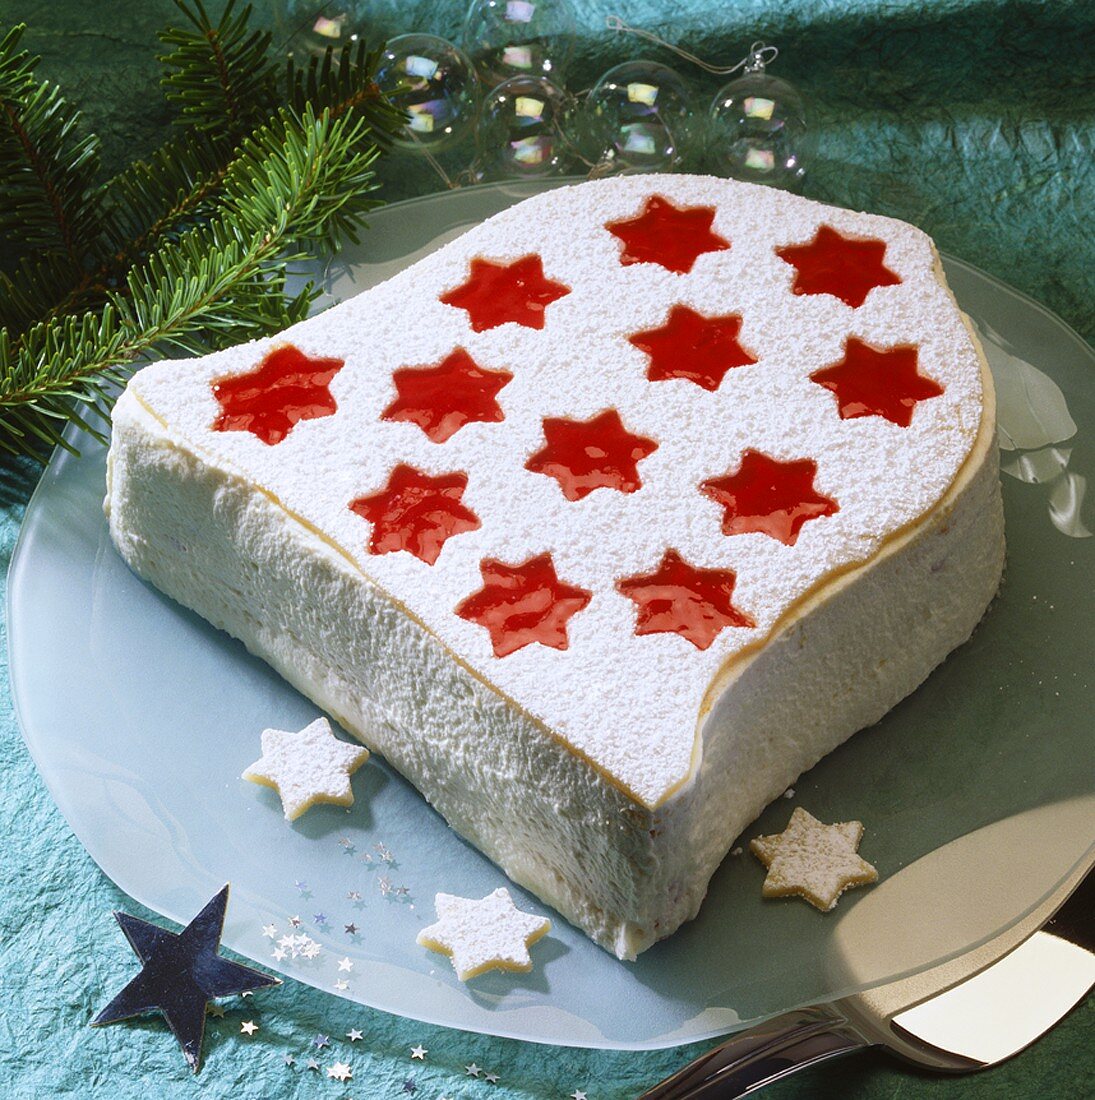 Bell-shaped Christmas cake